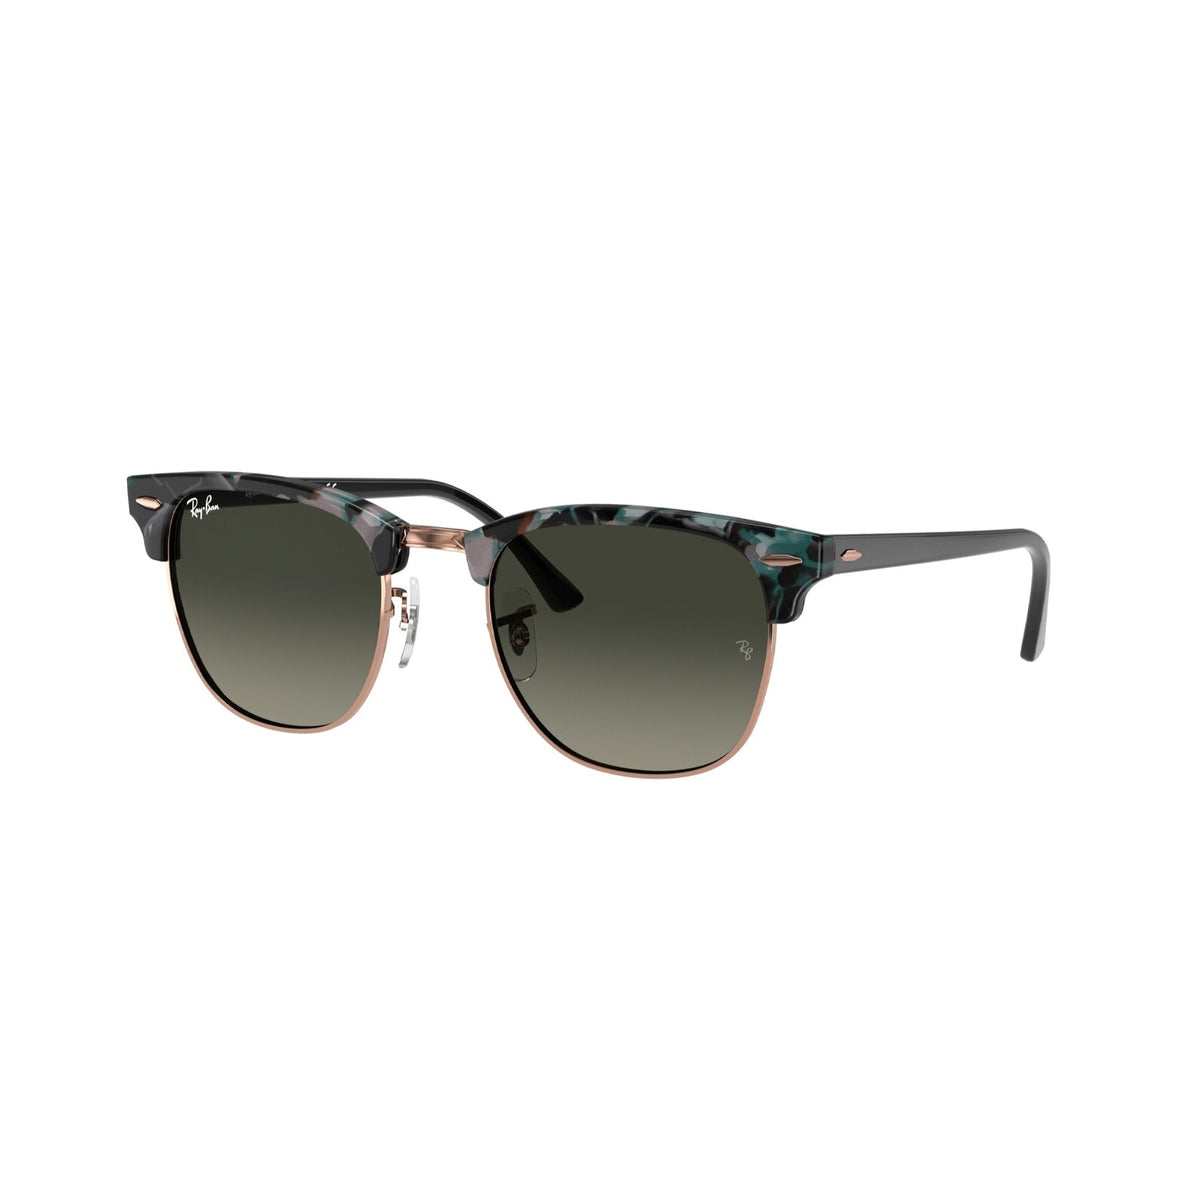 Ray-Ban Unisex Sunglasses Clubmaster Havana Light Grey Gradient Dark Grey Plastic Plastic  0RB3016 125571 49